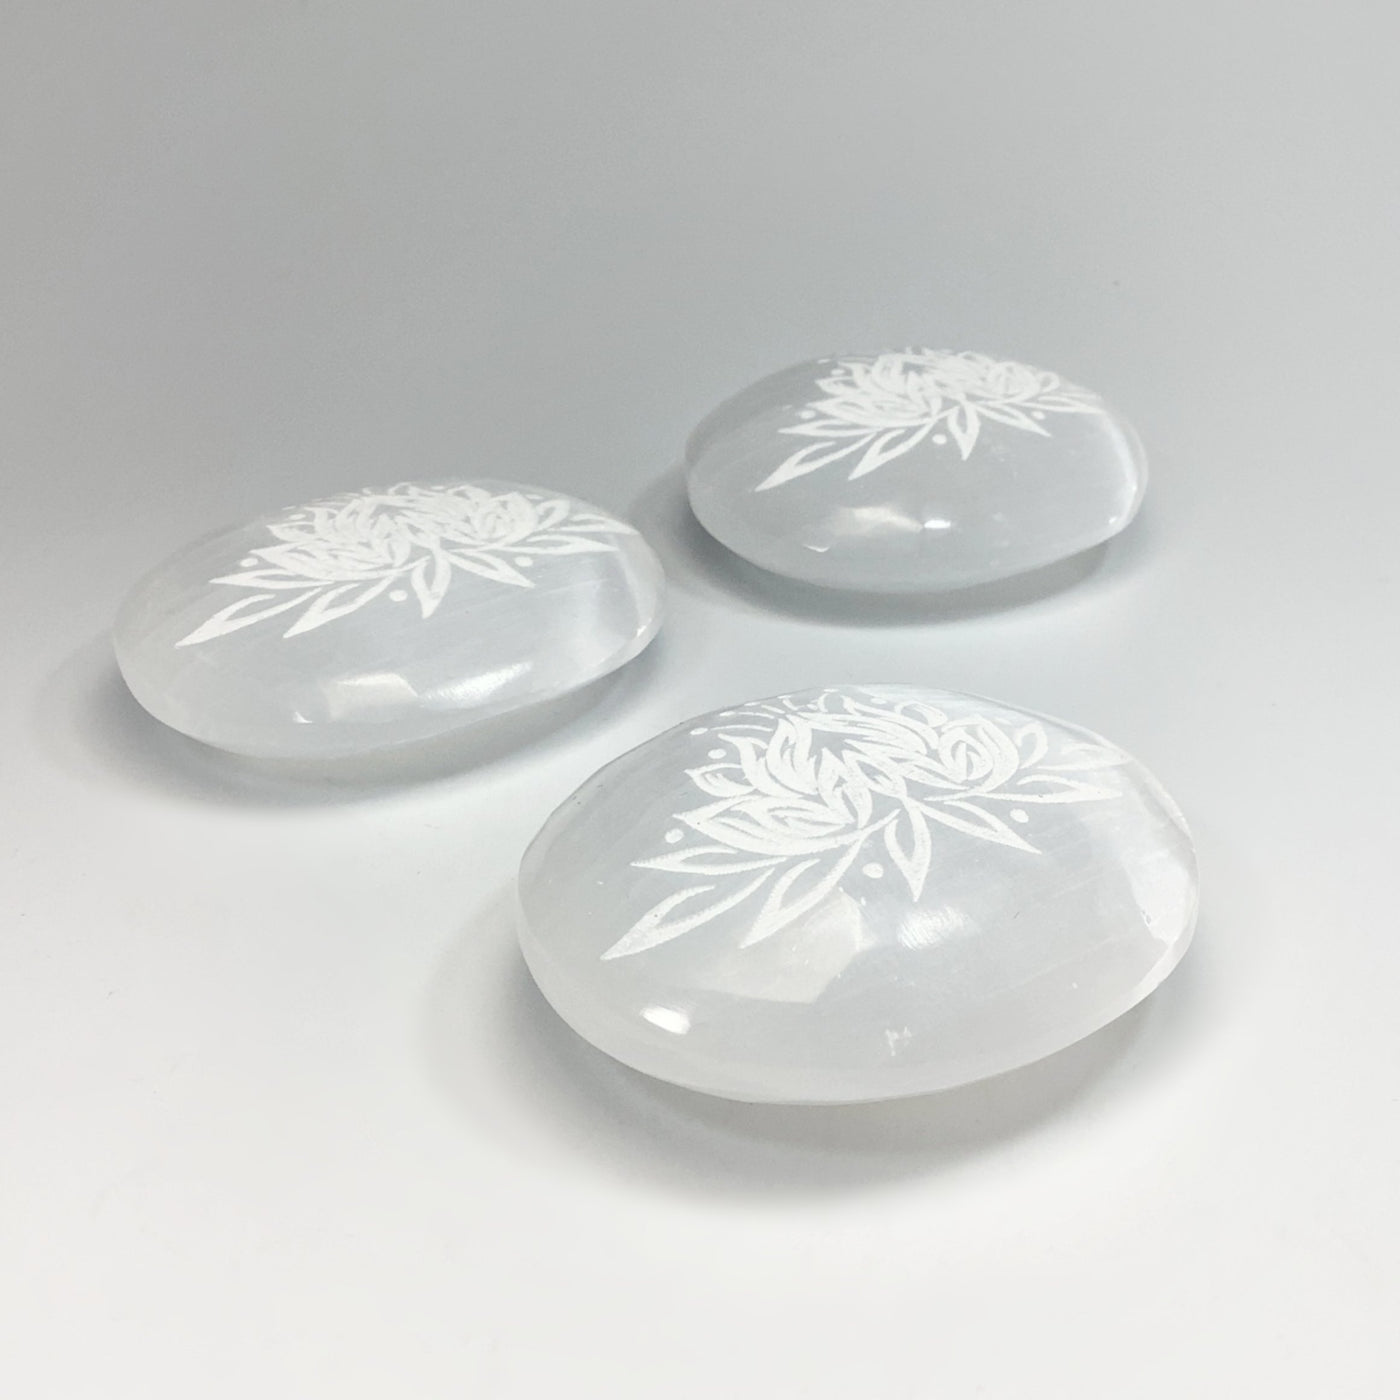 Selenite Palm Stone with Lotus Flower Engraving